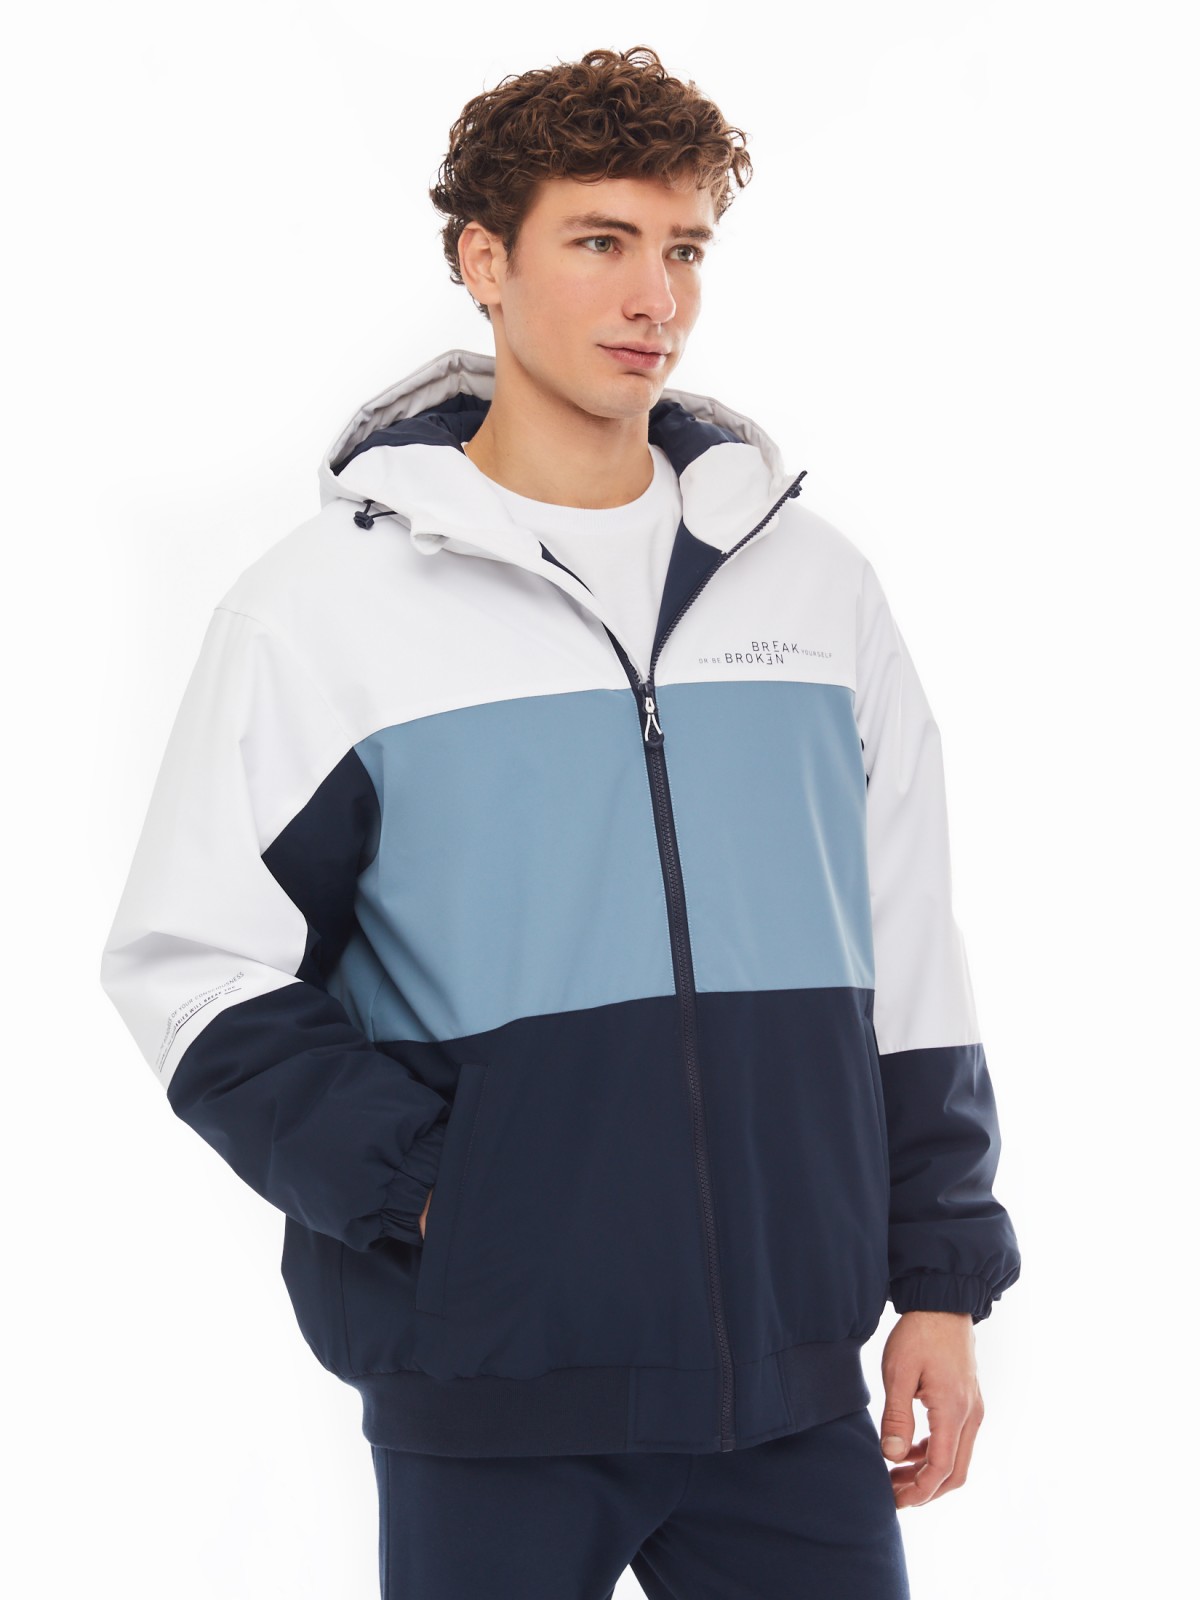 Утеплённая куртка-бомбер на синтепоне с капюшоном zolla 01412510L054, цвет синий, размер L - фото 4